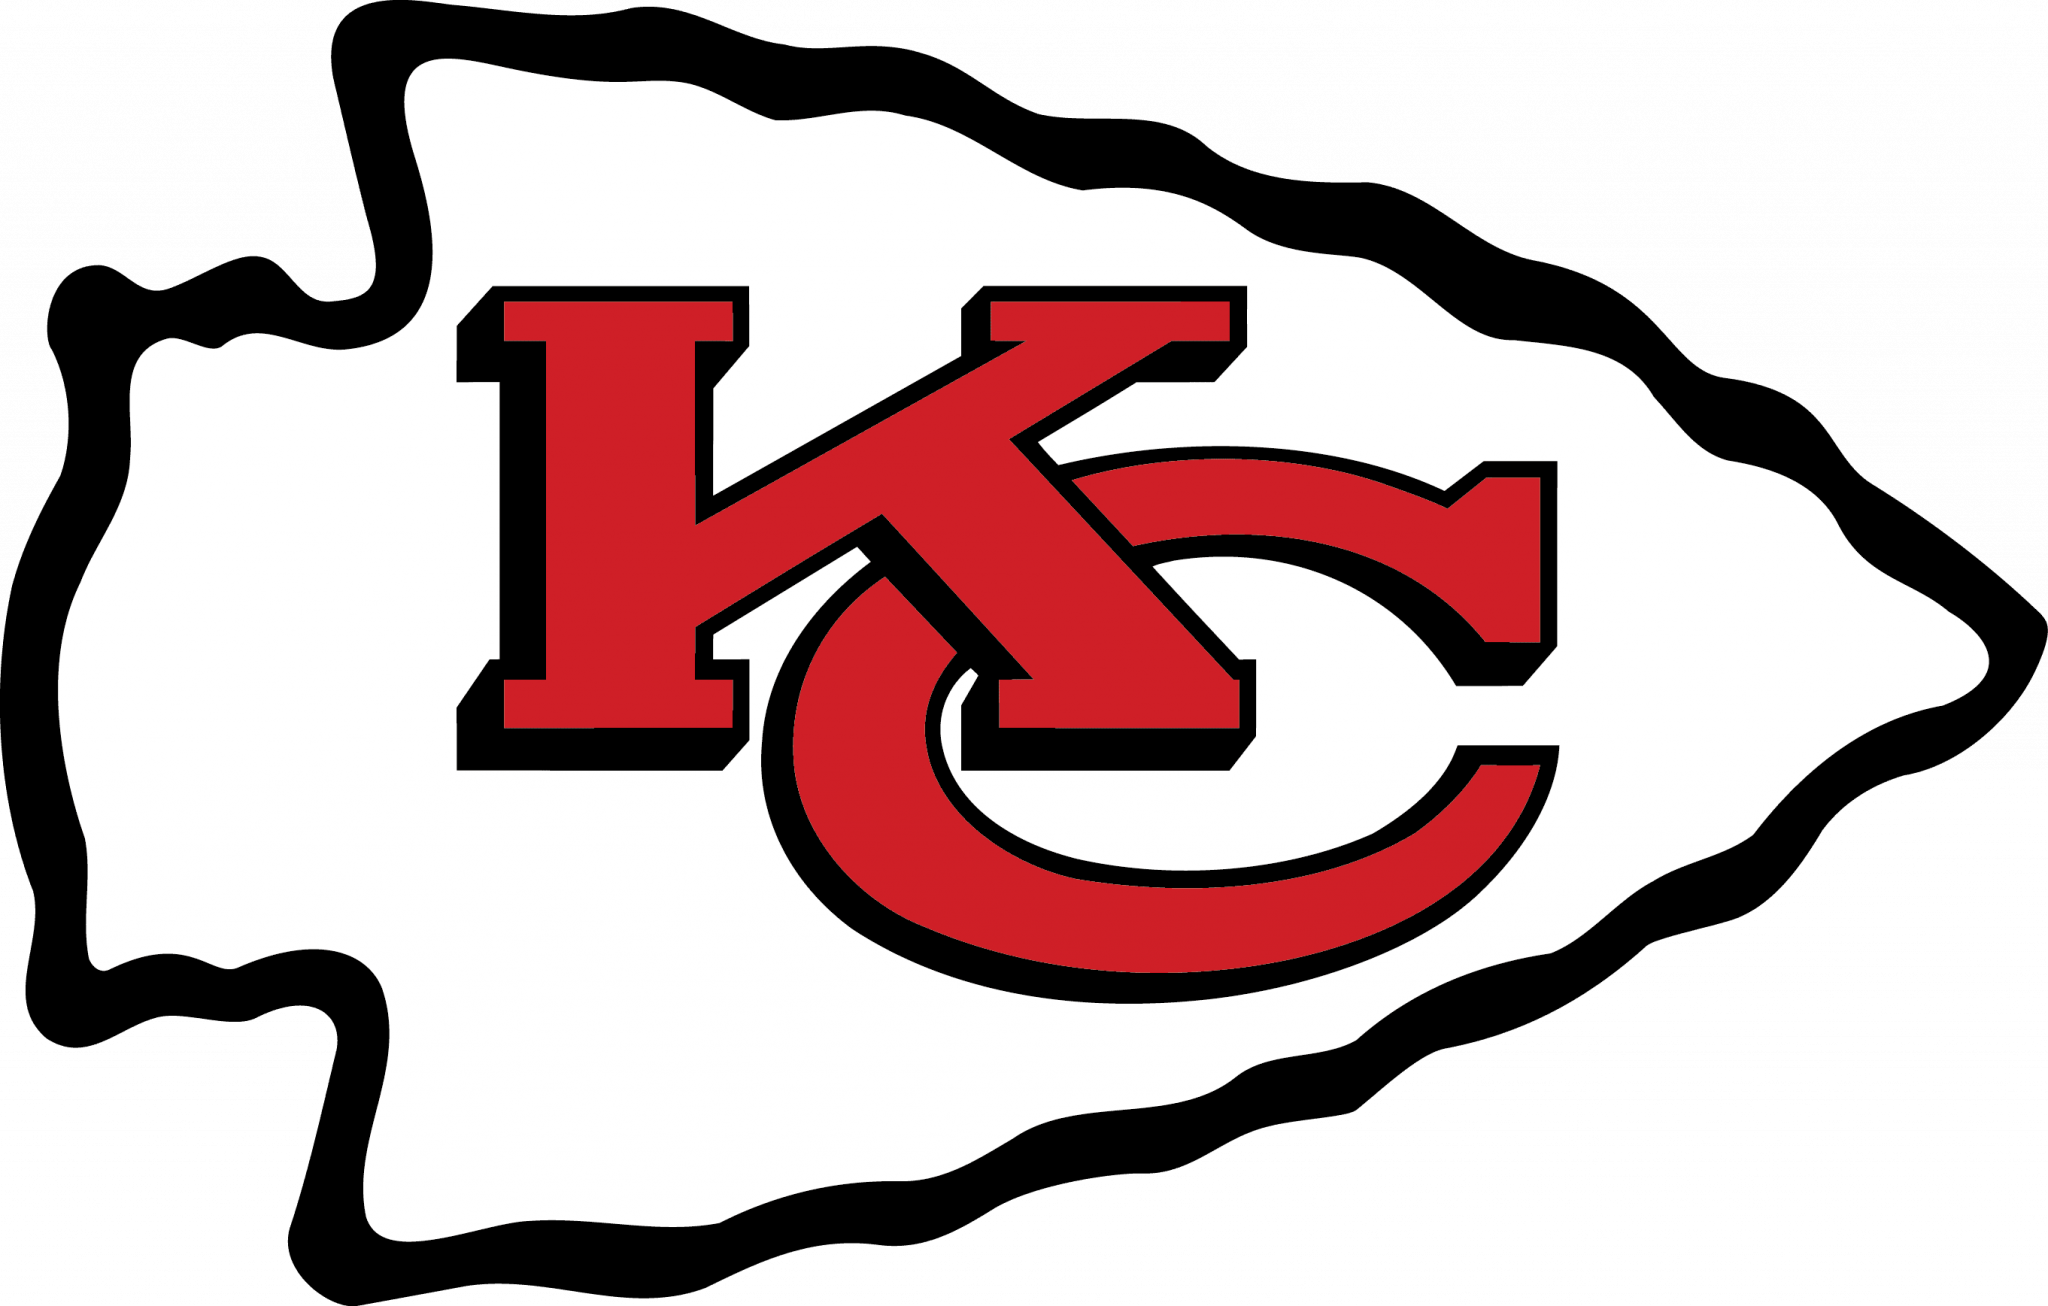 Kansas City Chiefs logo and history, Symbol, Helmets, Uniform | Nfl teams logo ang history